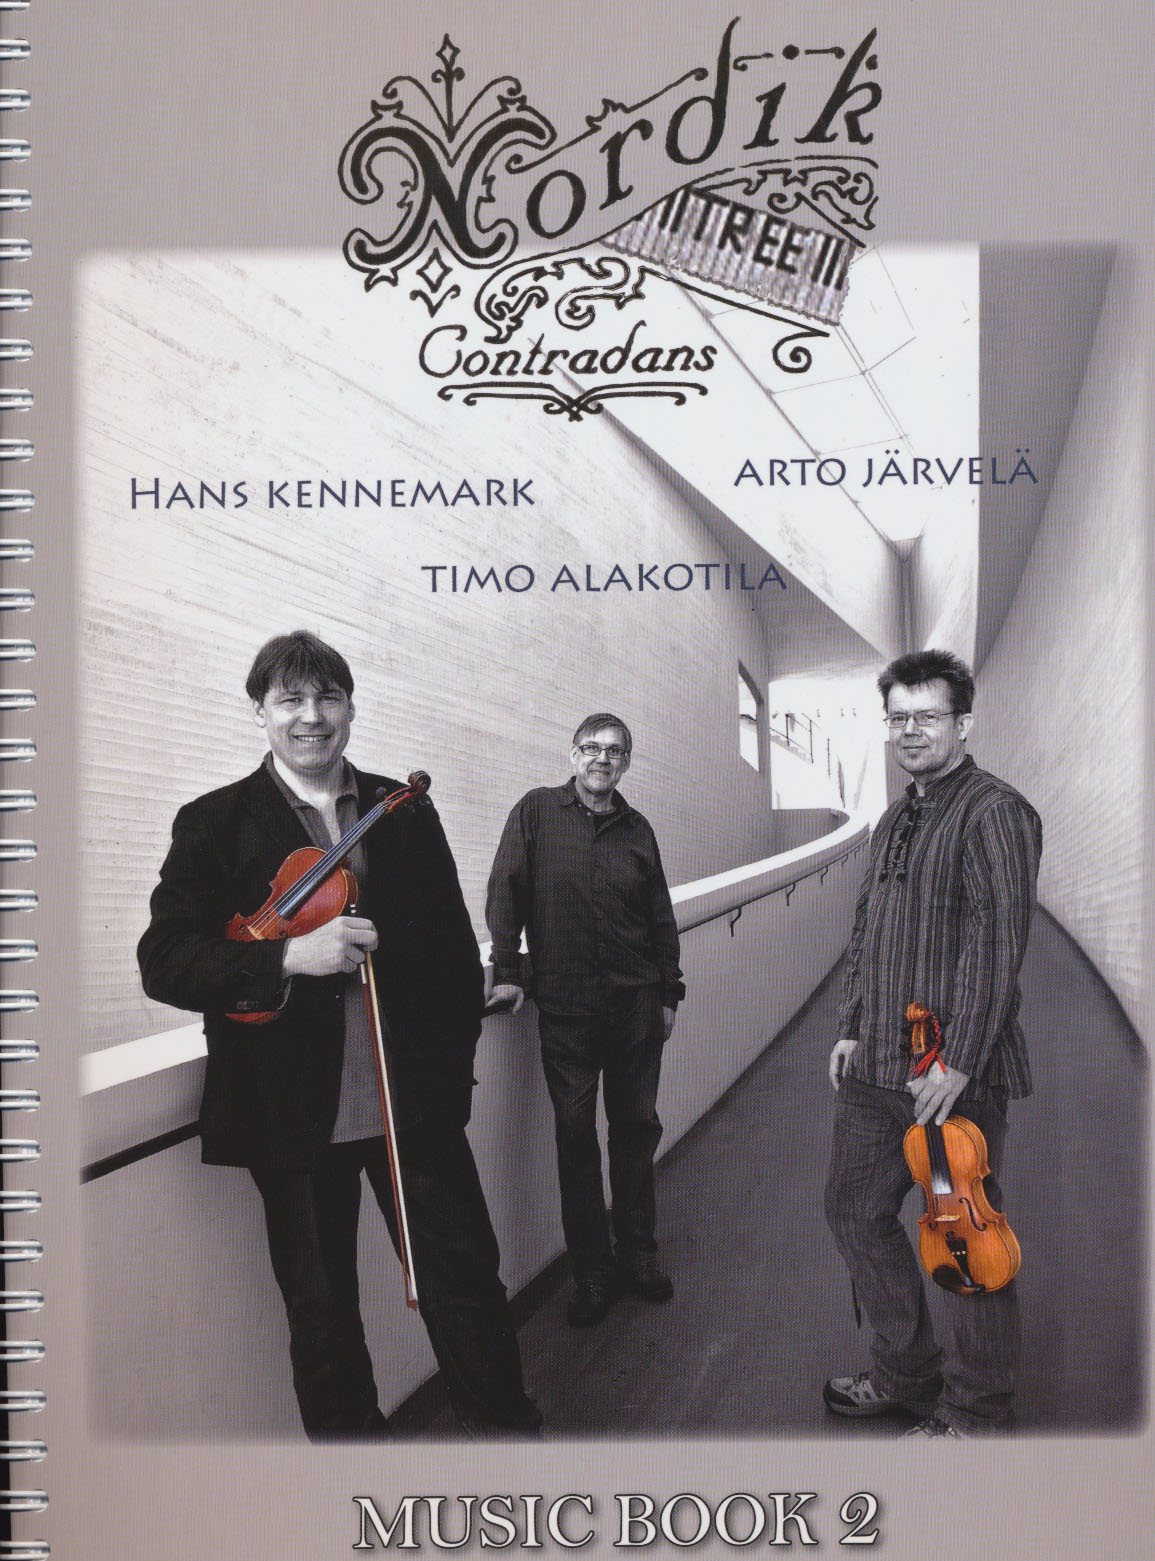 Nordik tree Contradans - Music Book 2 (2vl,harmonium)